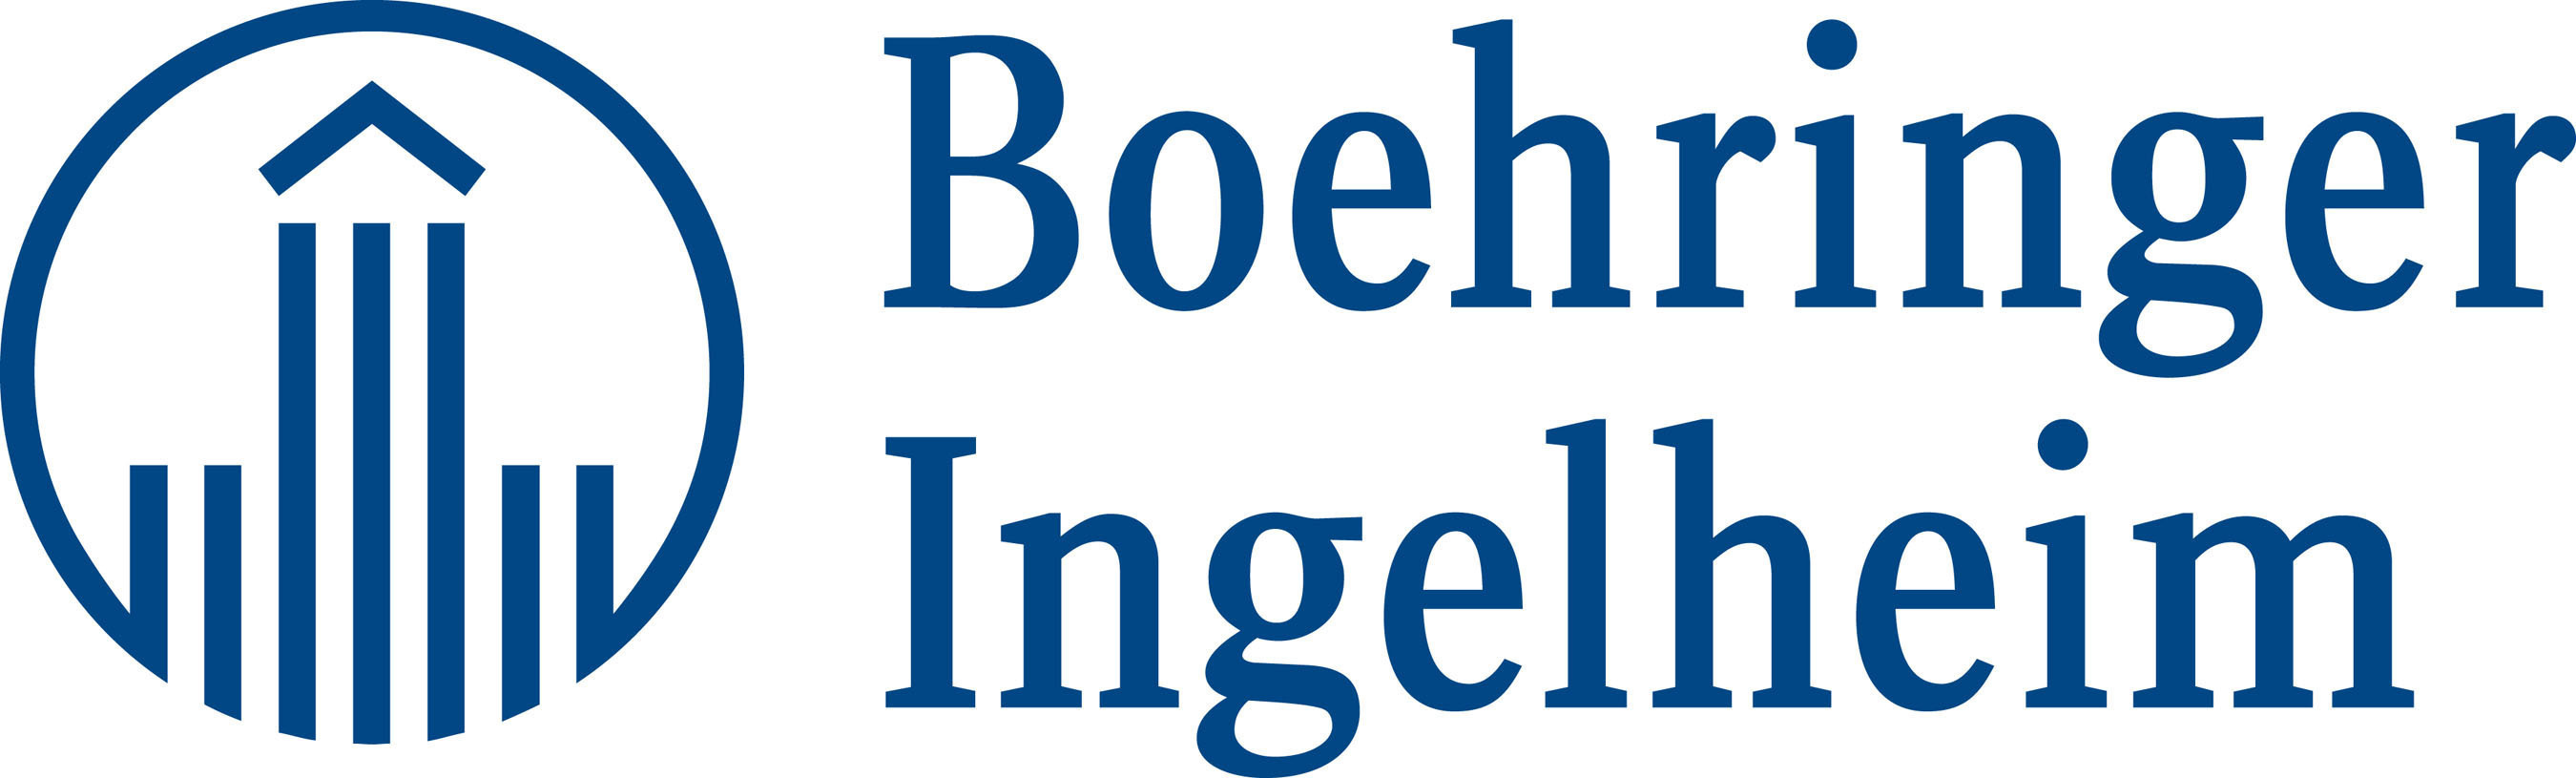 Boehringer Ingelheim Pharmaceuticals, Inc. logo.